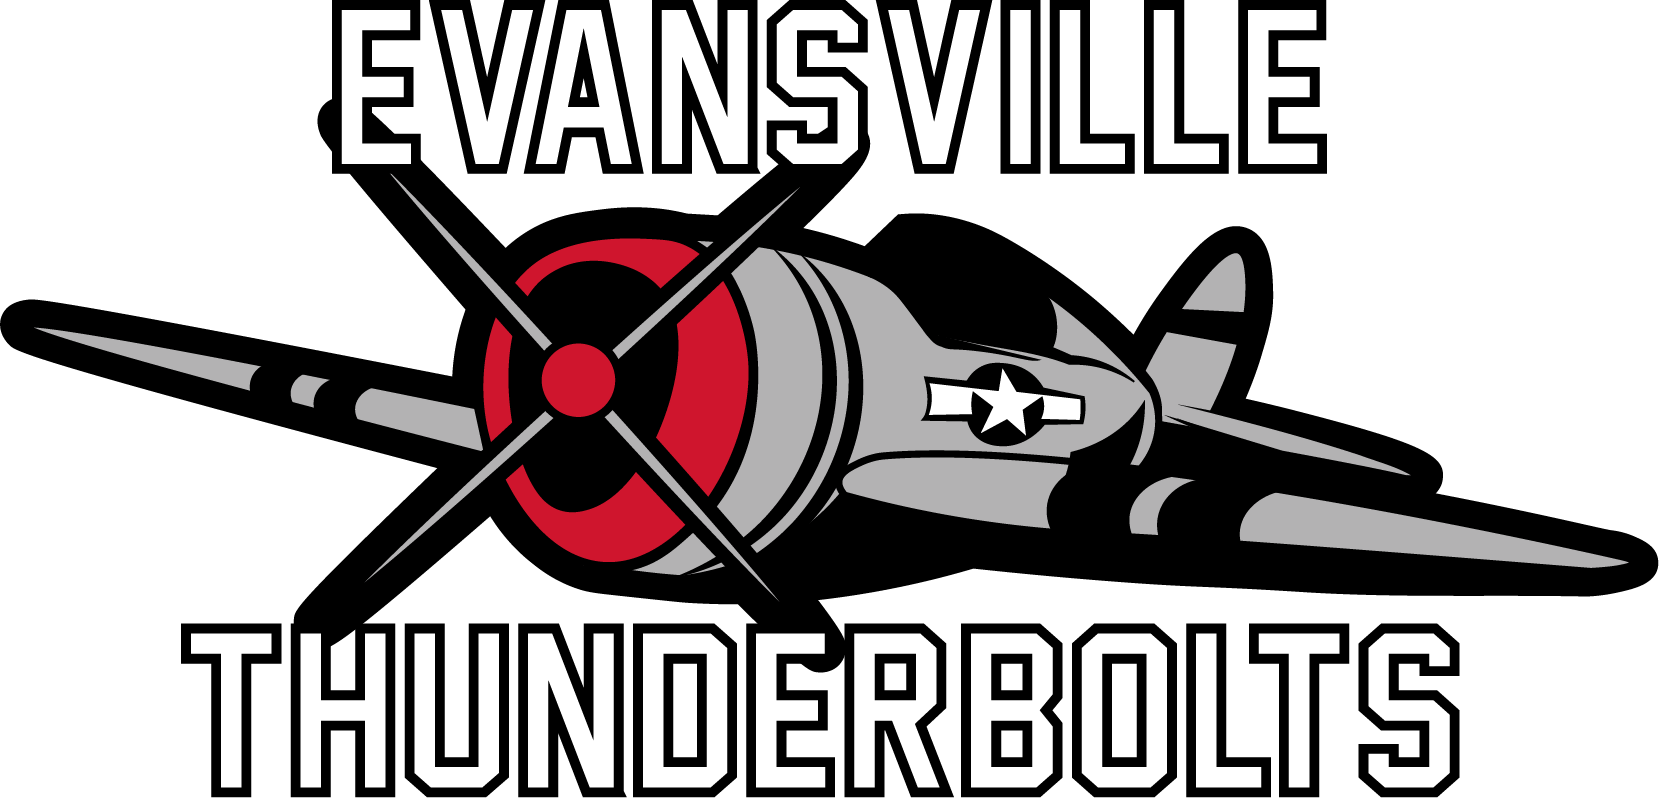 Evansville's Pro Hockey Team Evansville Thunderbolts Season Tickets